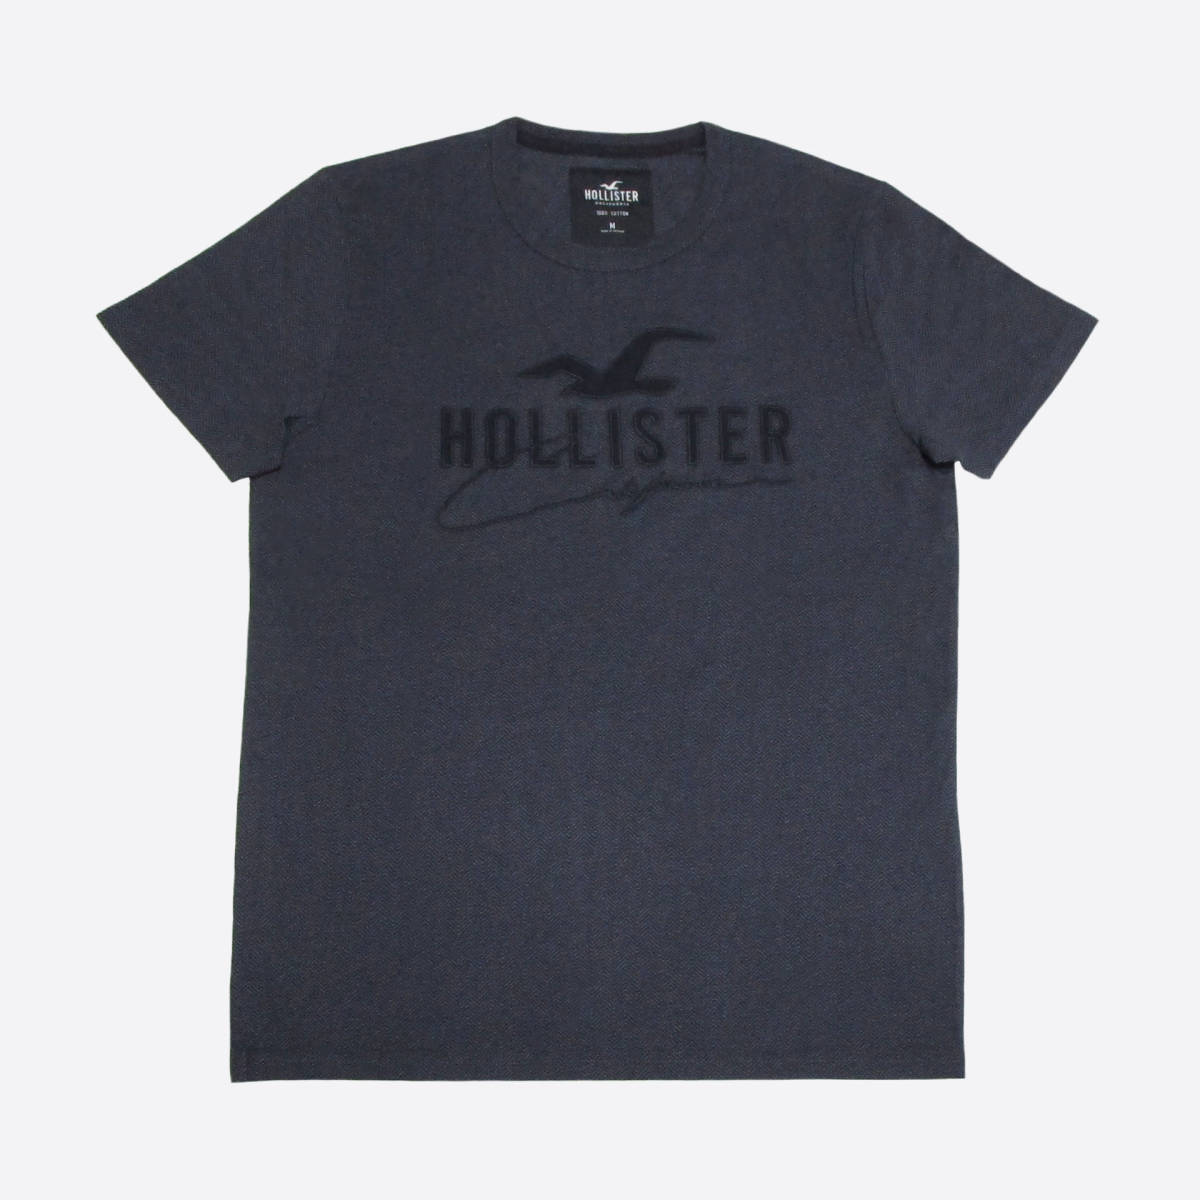 ★SALE★Hollister/ホリスター★アップリケロゴヘリンボーンTシャツ (Dark Grey/XL)